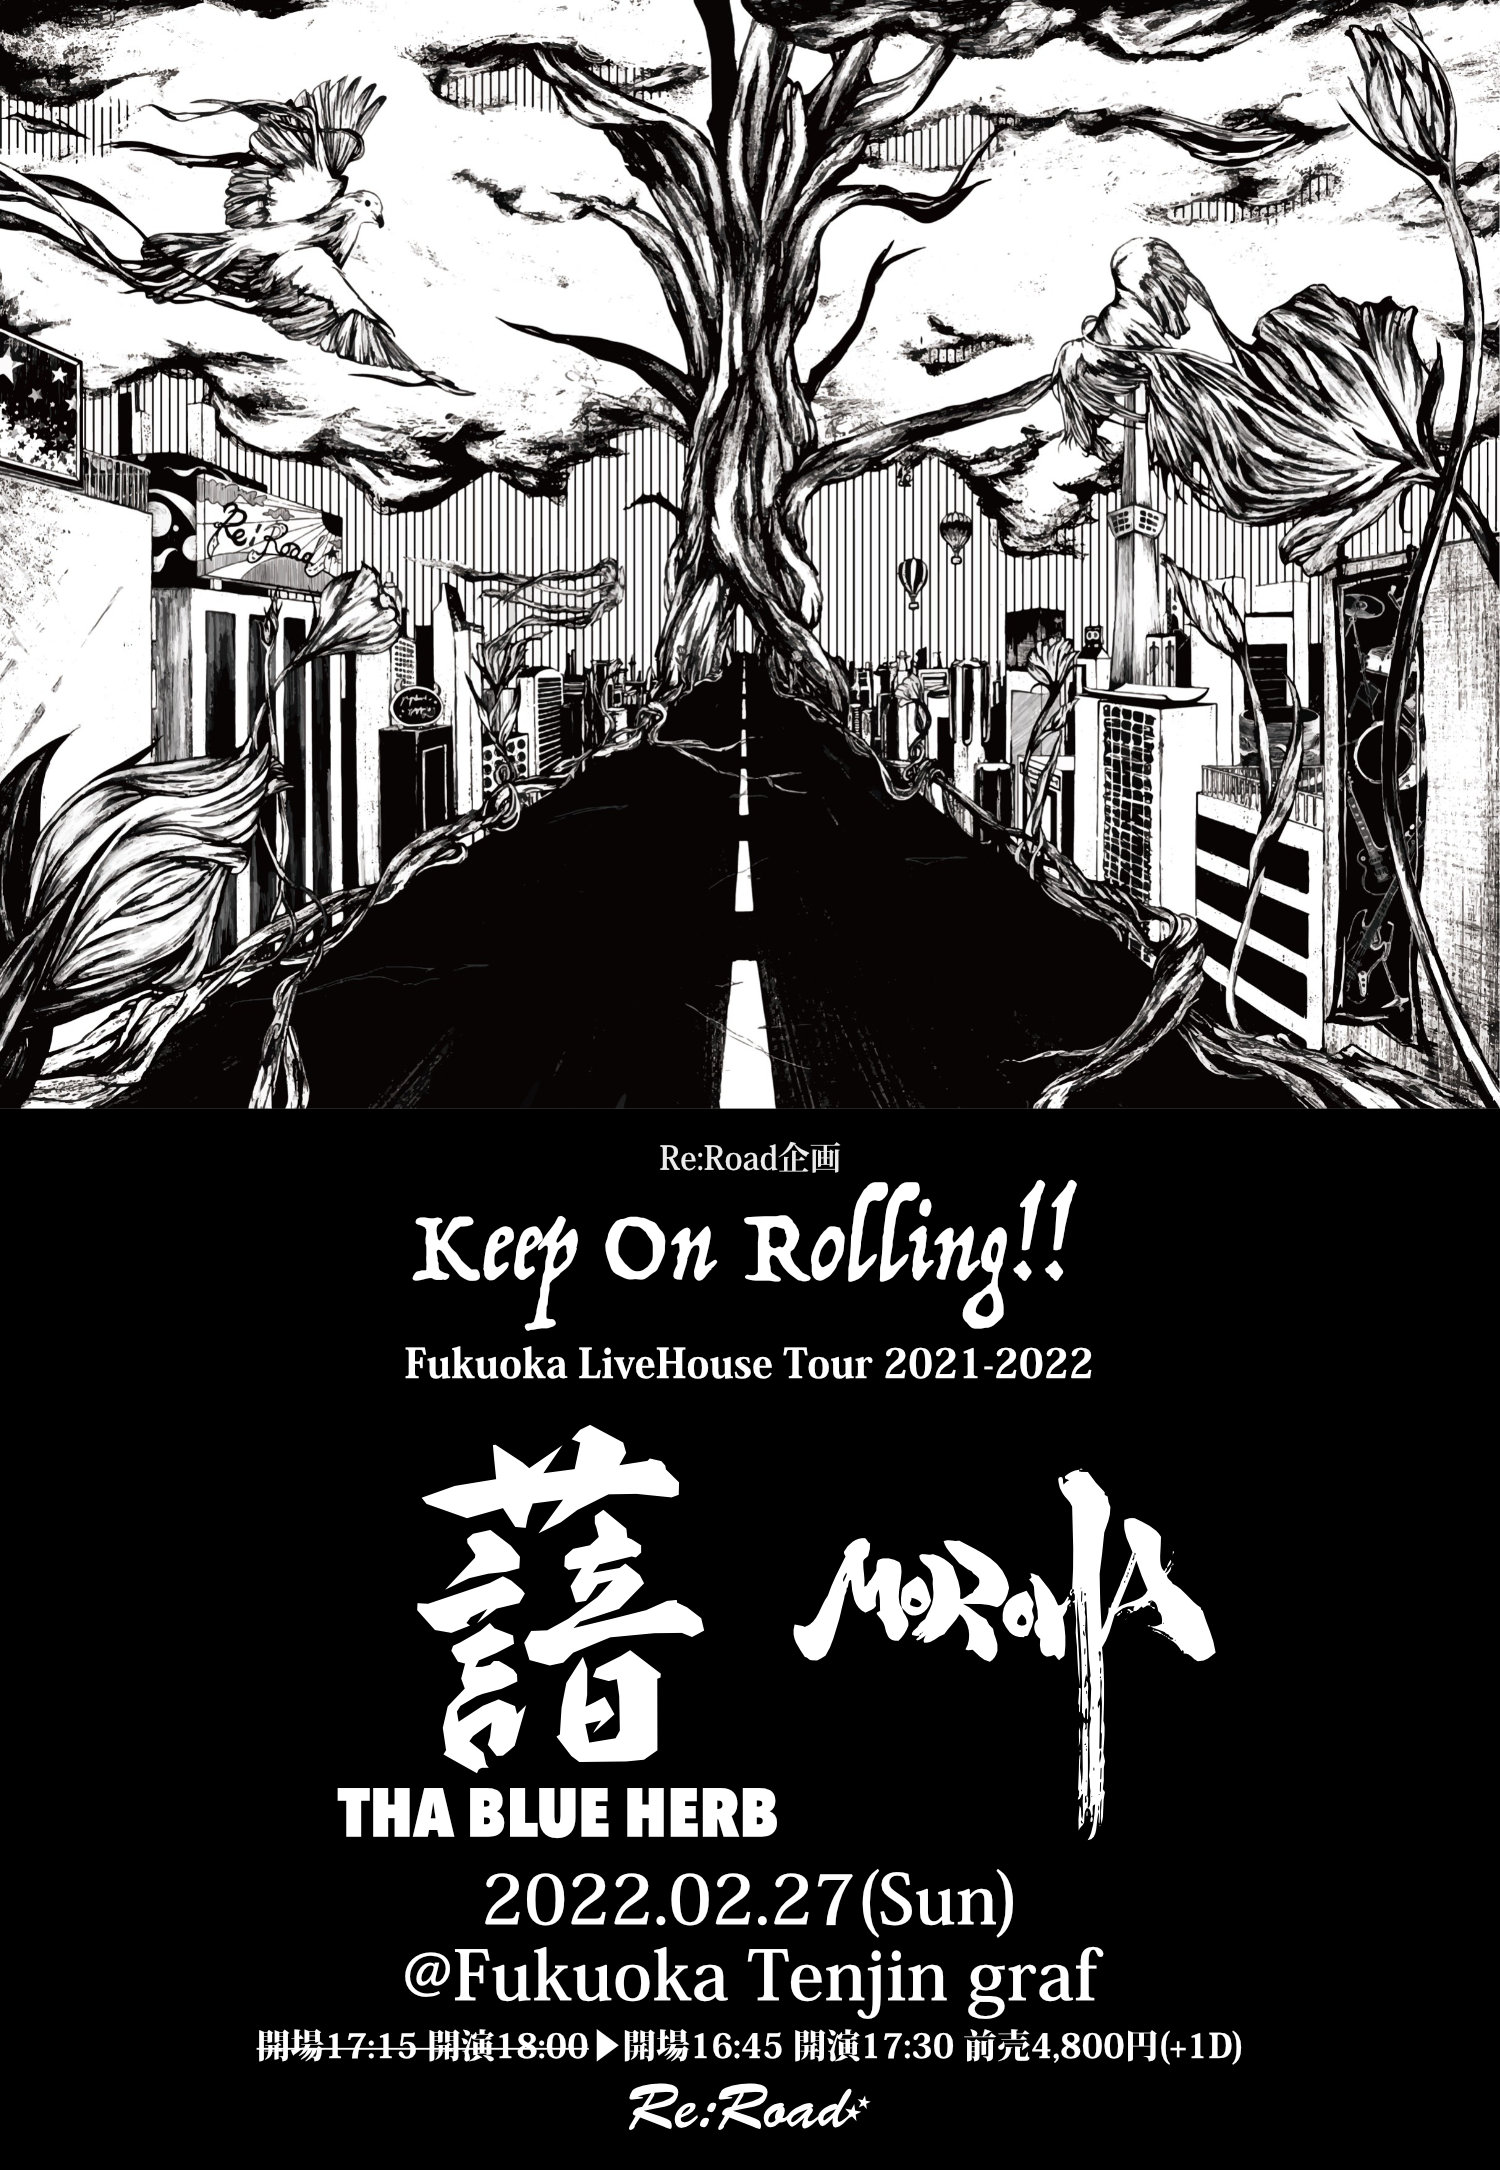 Re:Road企画「Keep On Rolling!! Fukuoka LiveHouse Tour 2021-2022」